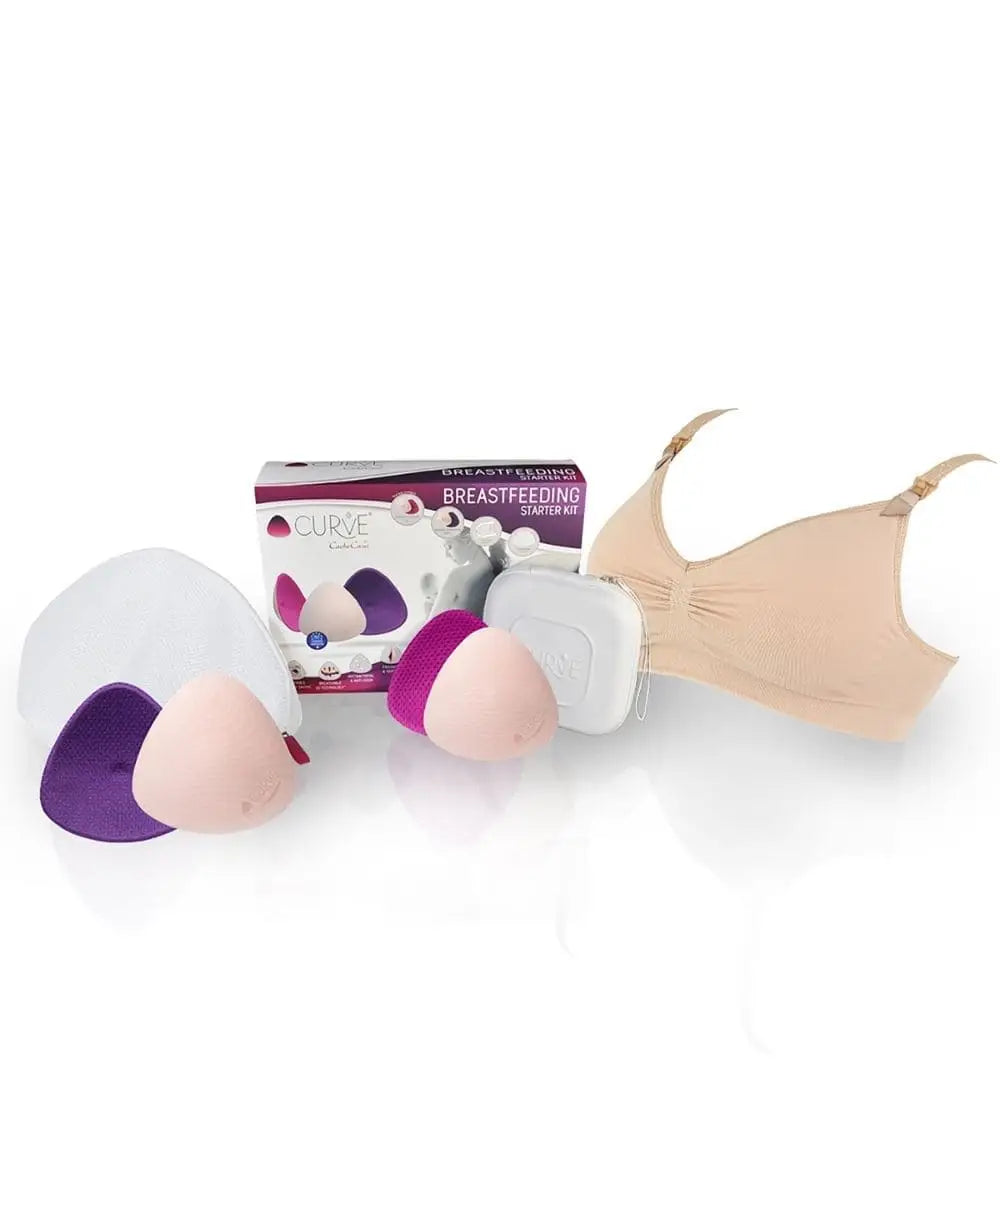 Starter Nude curve breastfeeding kit